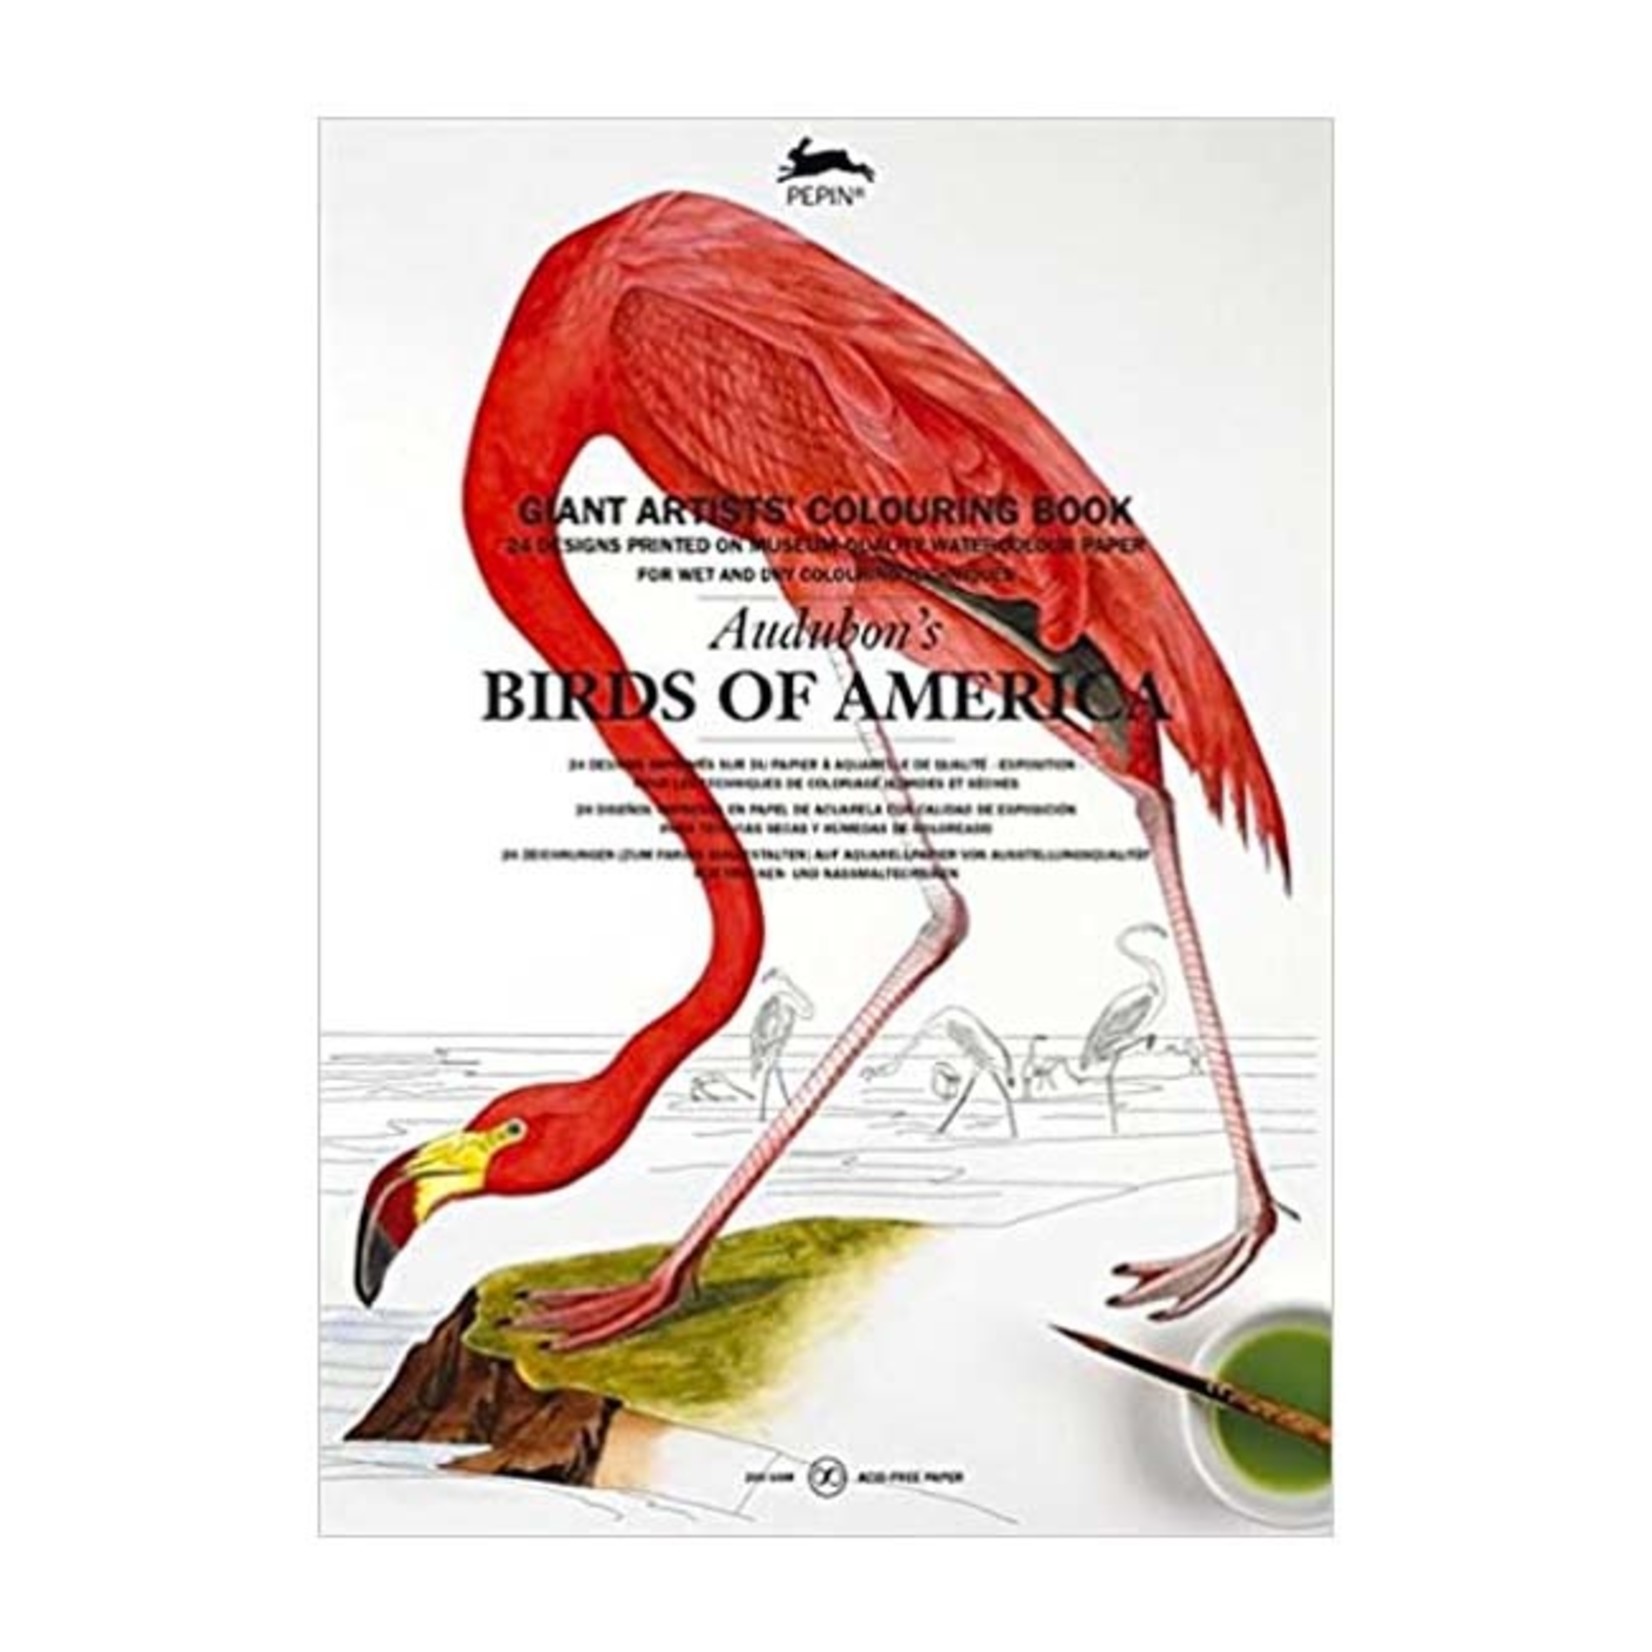 PEPIN GIANT ARTISTS' COLOURING BOOK AUDUBON'S BIRDS OF AMERICA